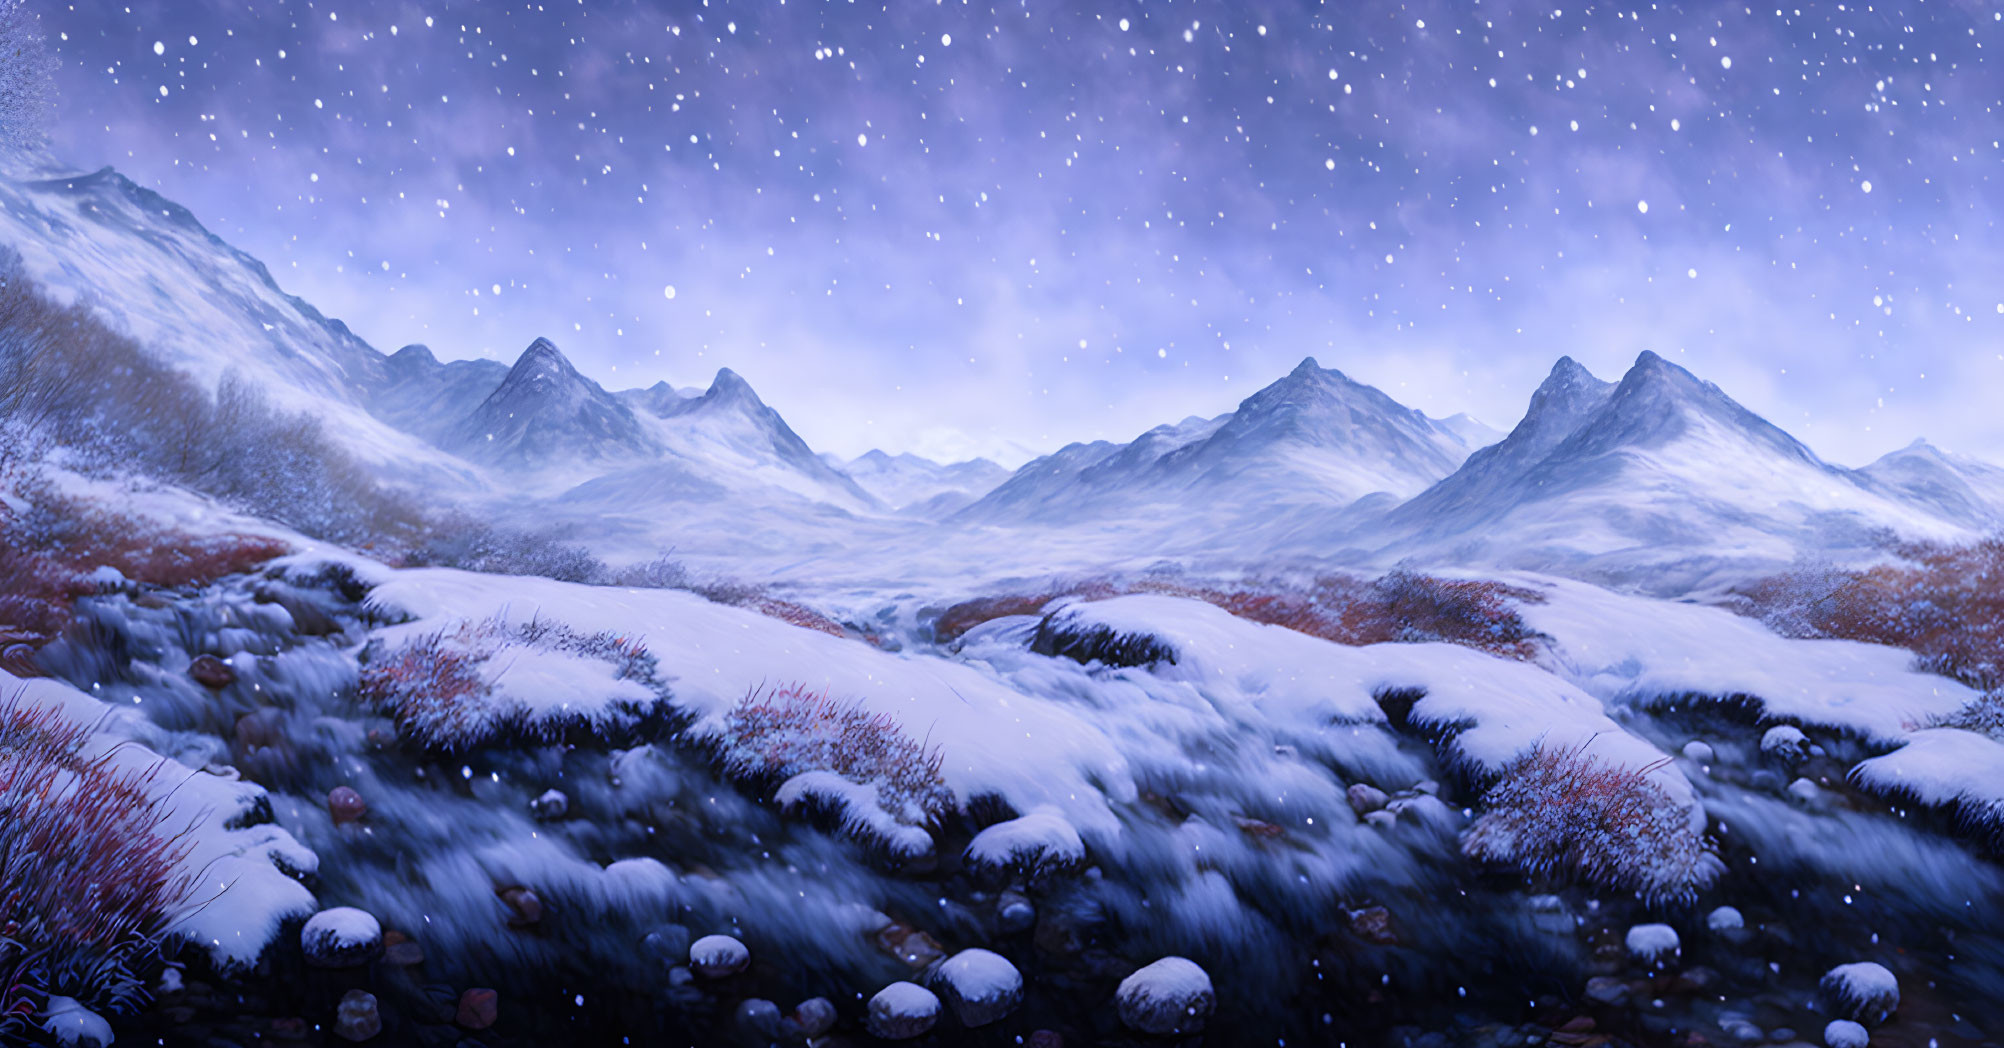 Starry Snow-Capped Peaks